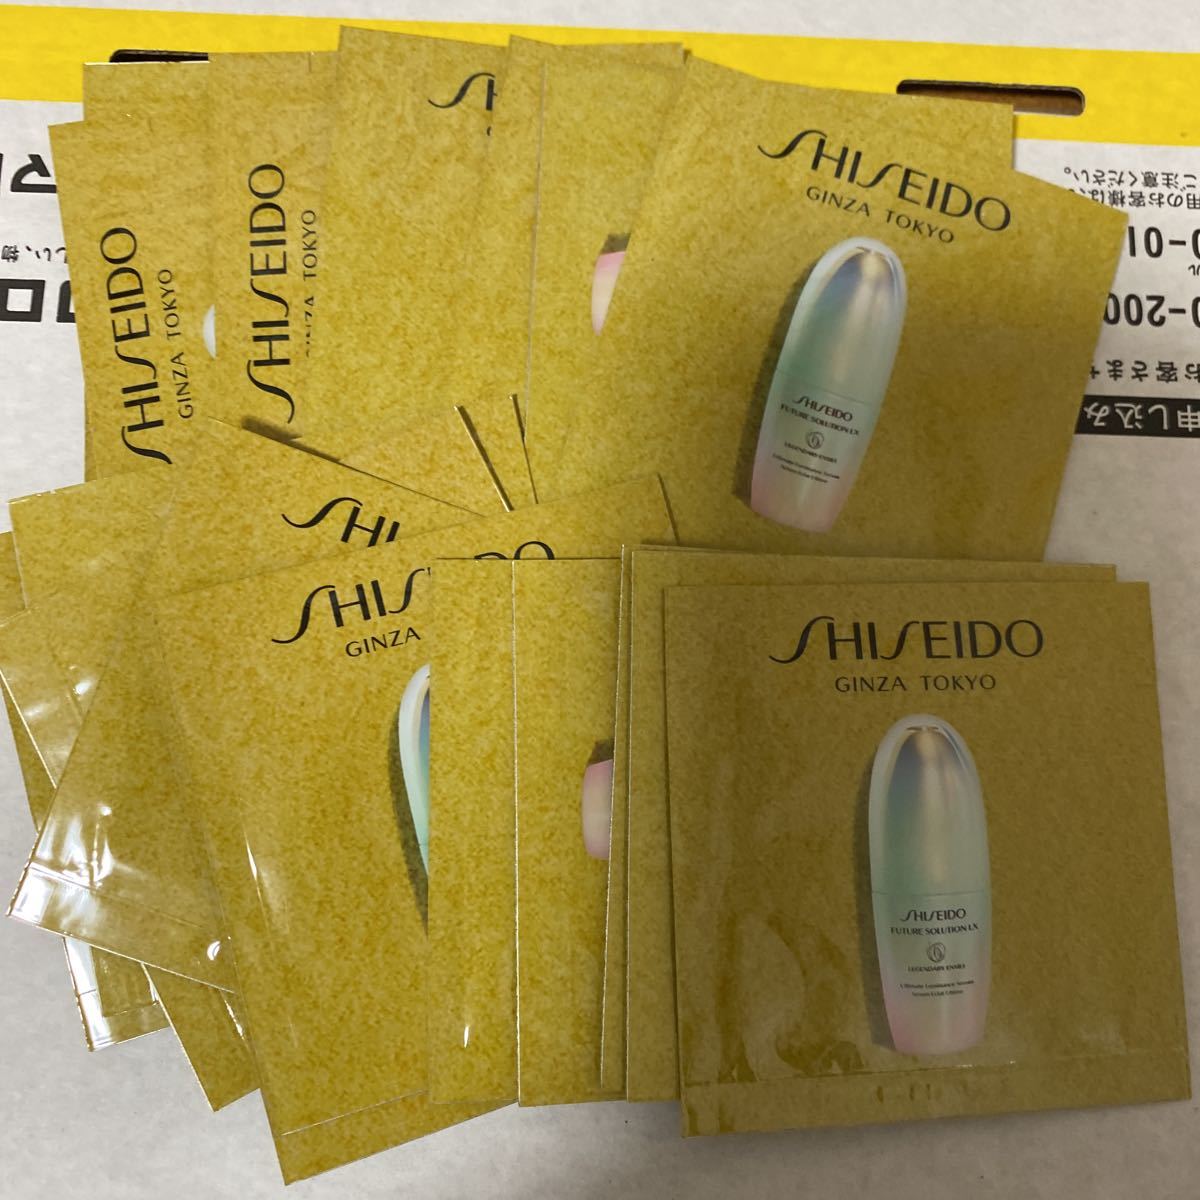  Shiseido Future so dragon shonLXrejenda Lee sample beauty care liquid 1ml×20 sheets 